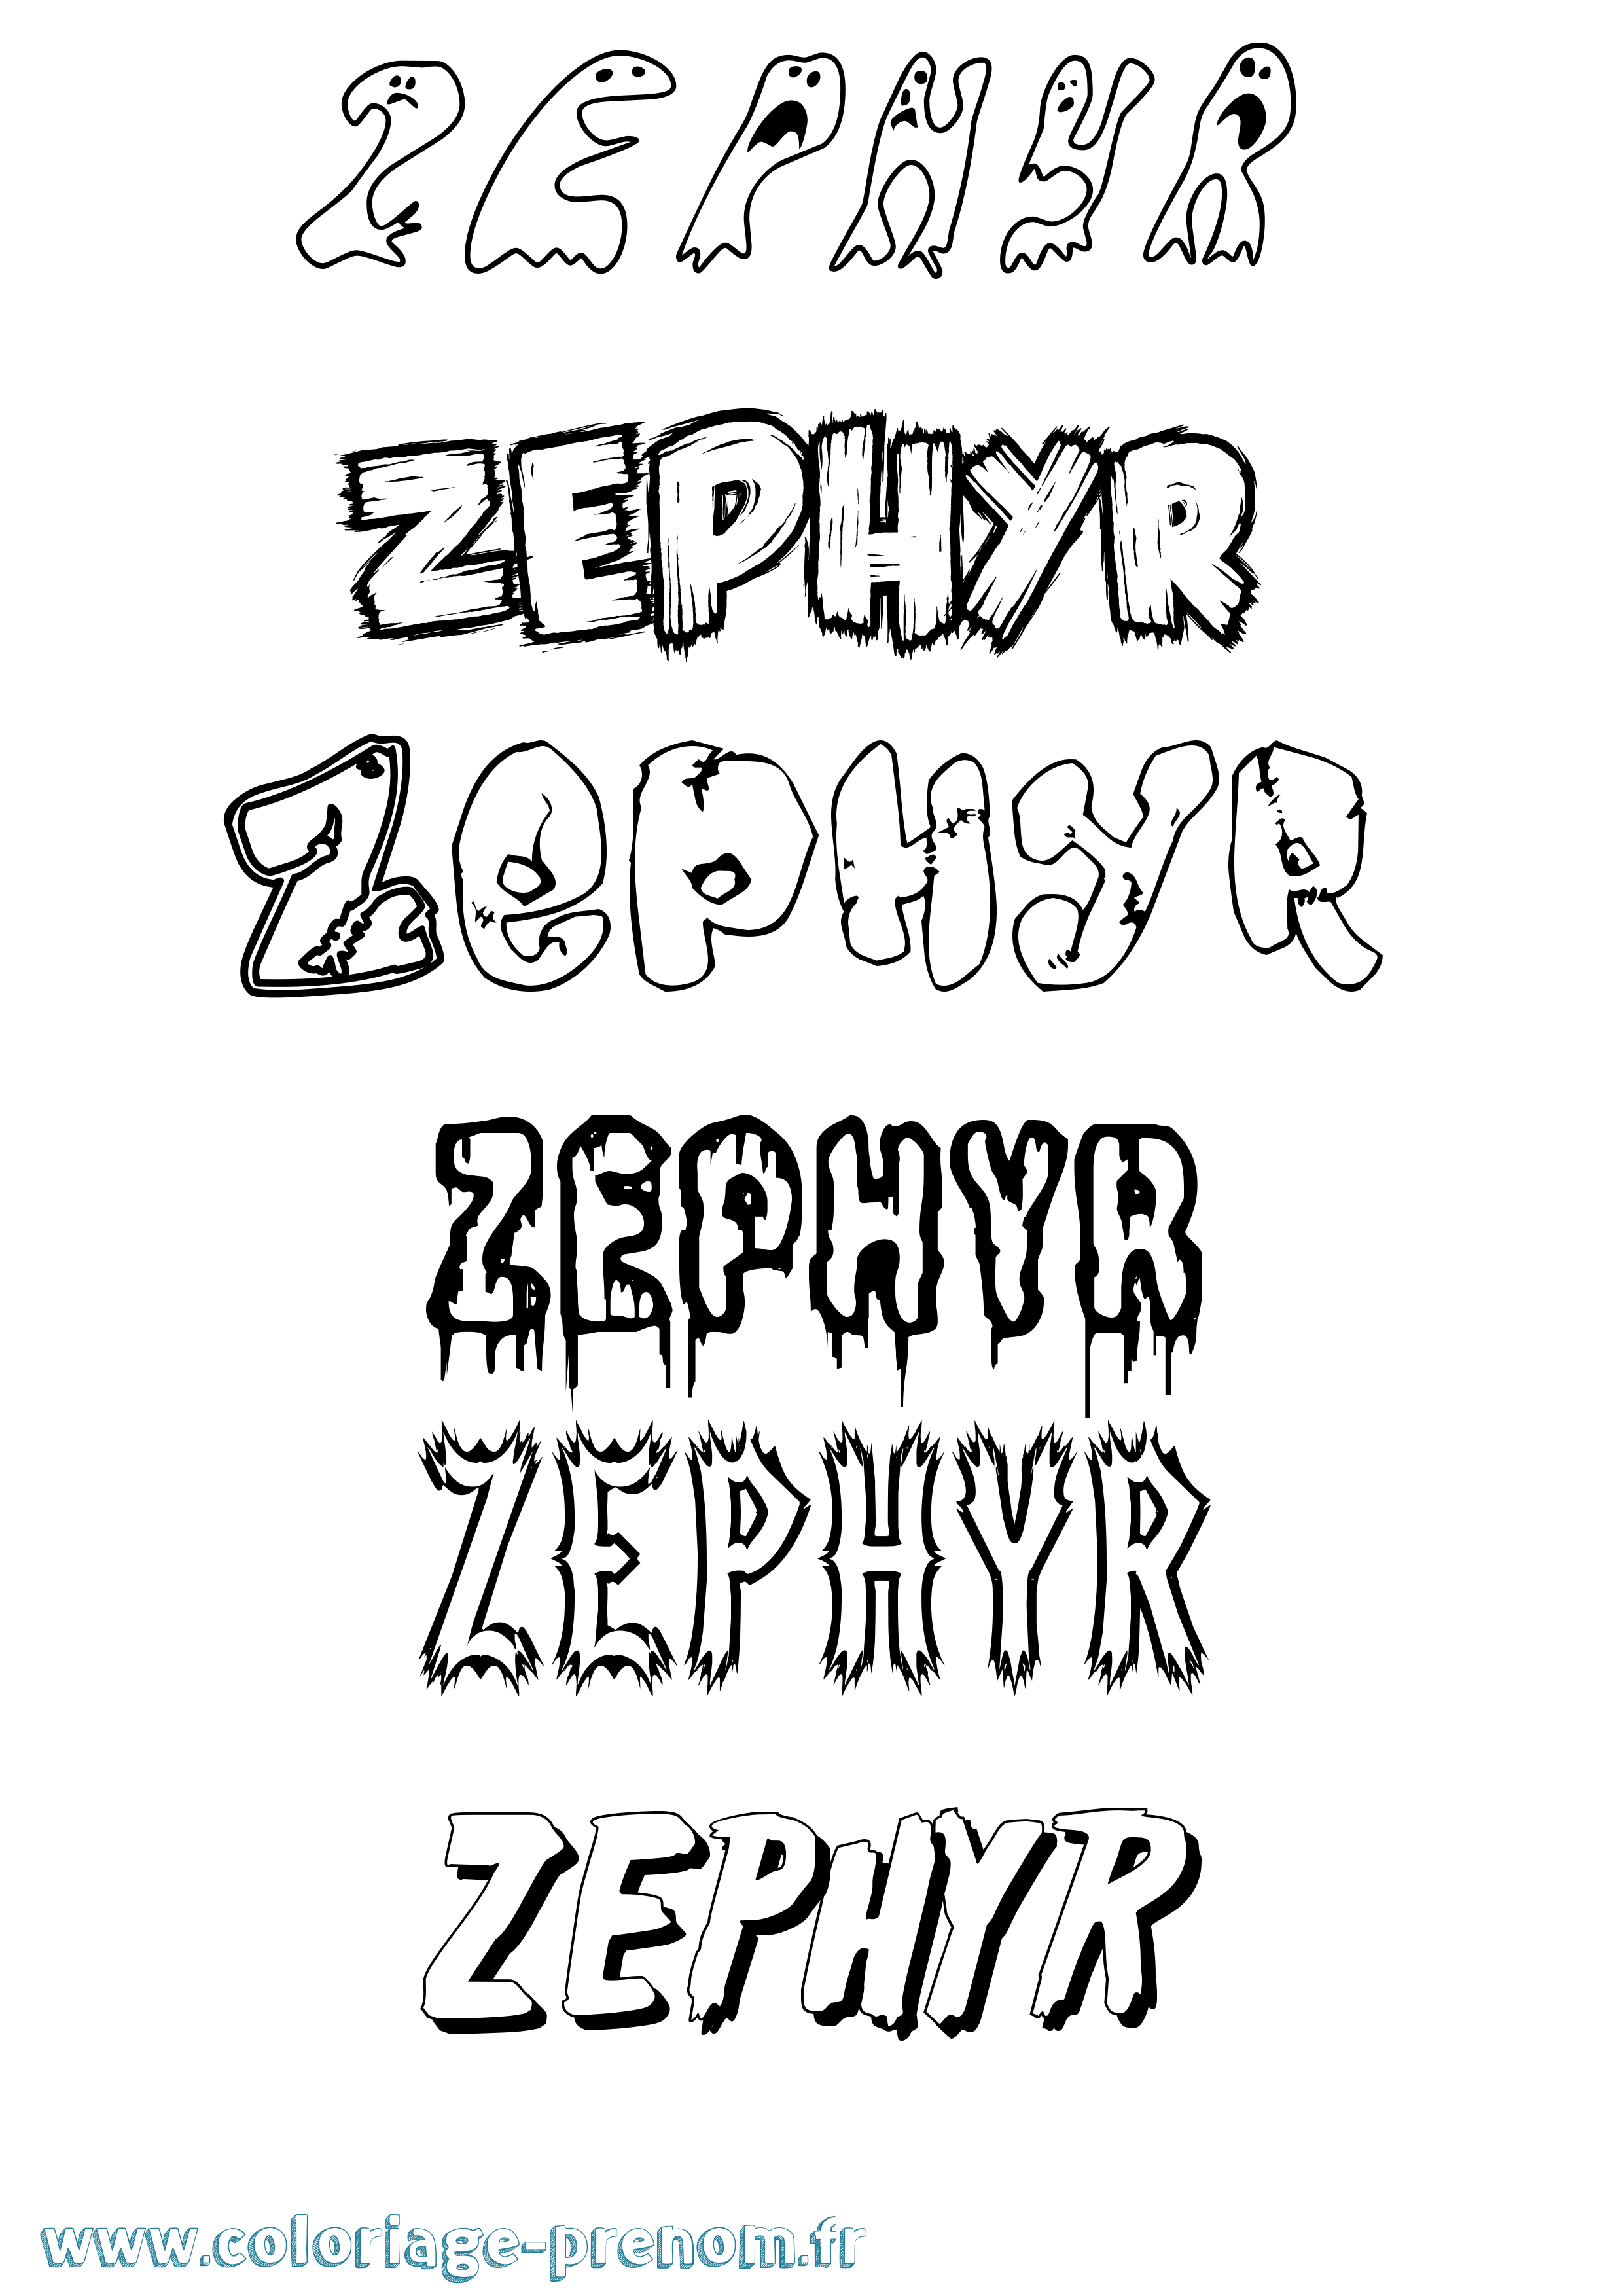 Coloriage prénom Zephyr